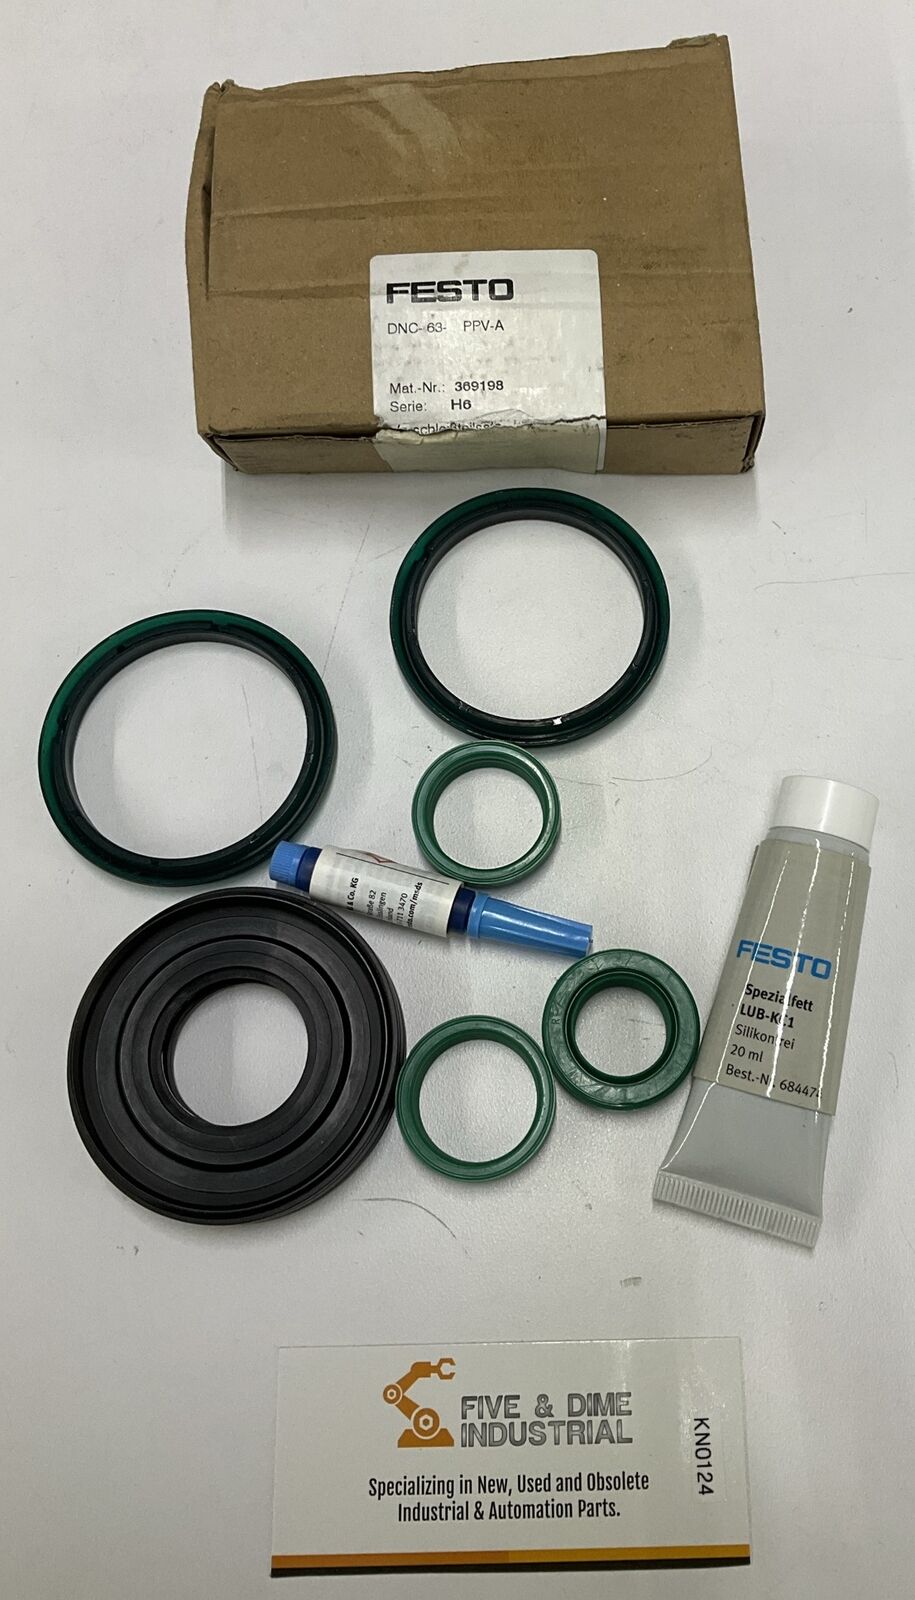 Festo DNC-63-PPV-A 369198 Cylinder Repair Kit (GR130)